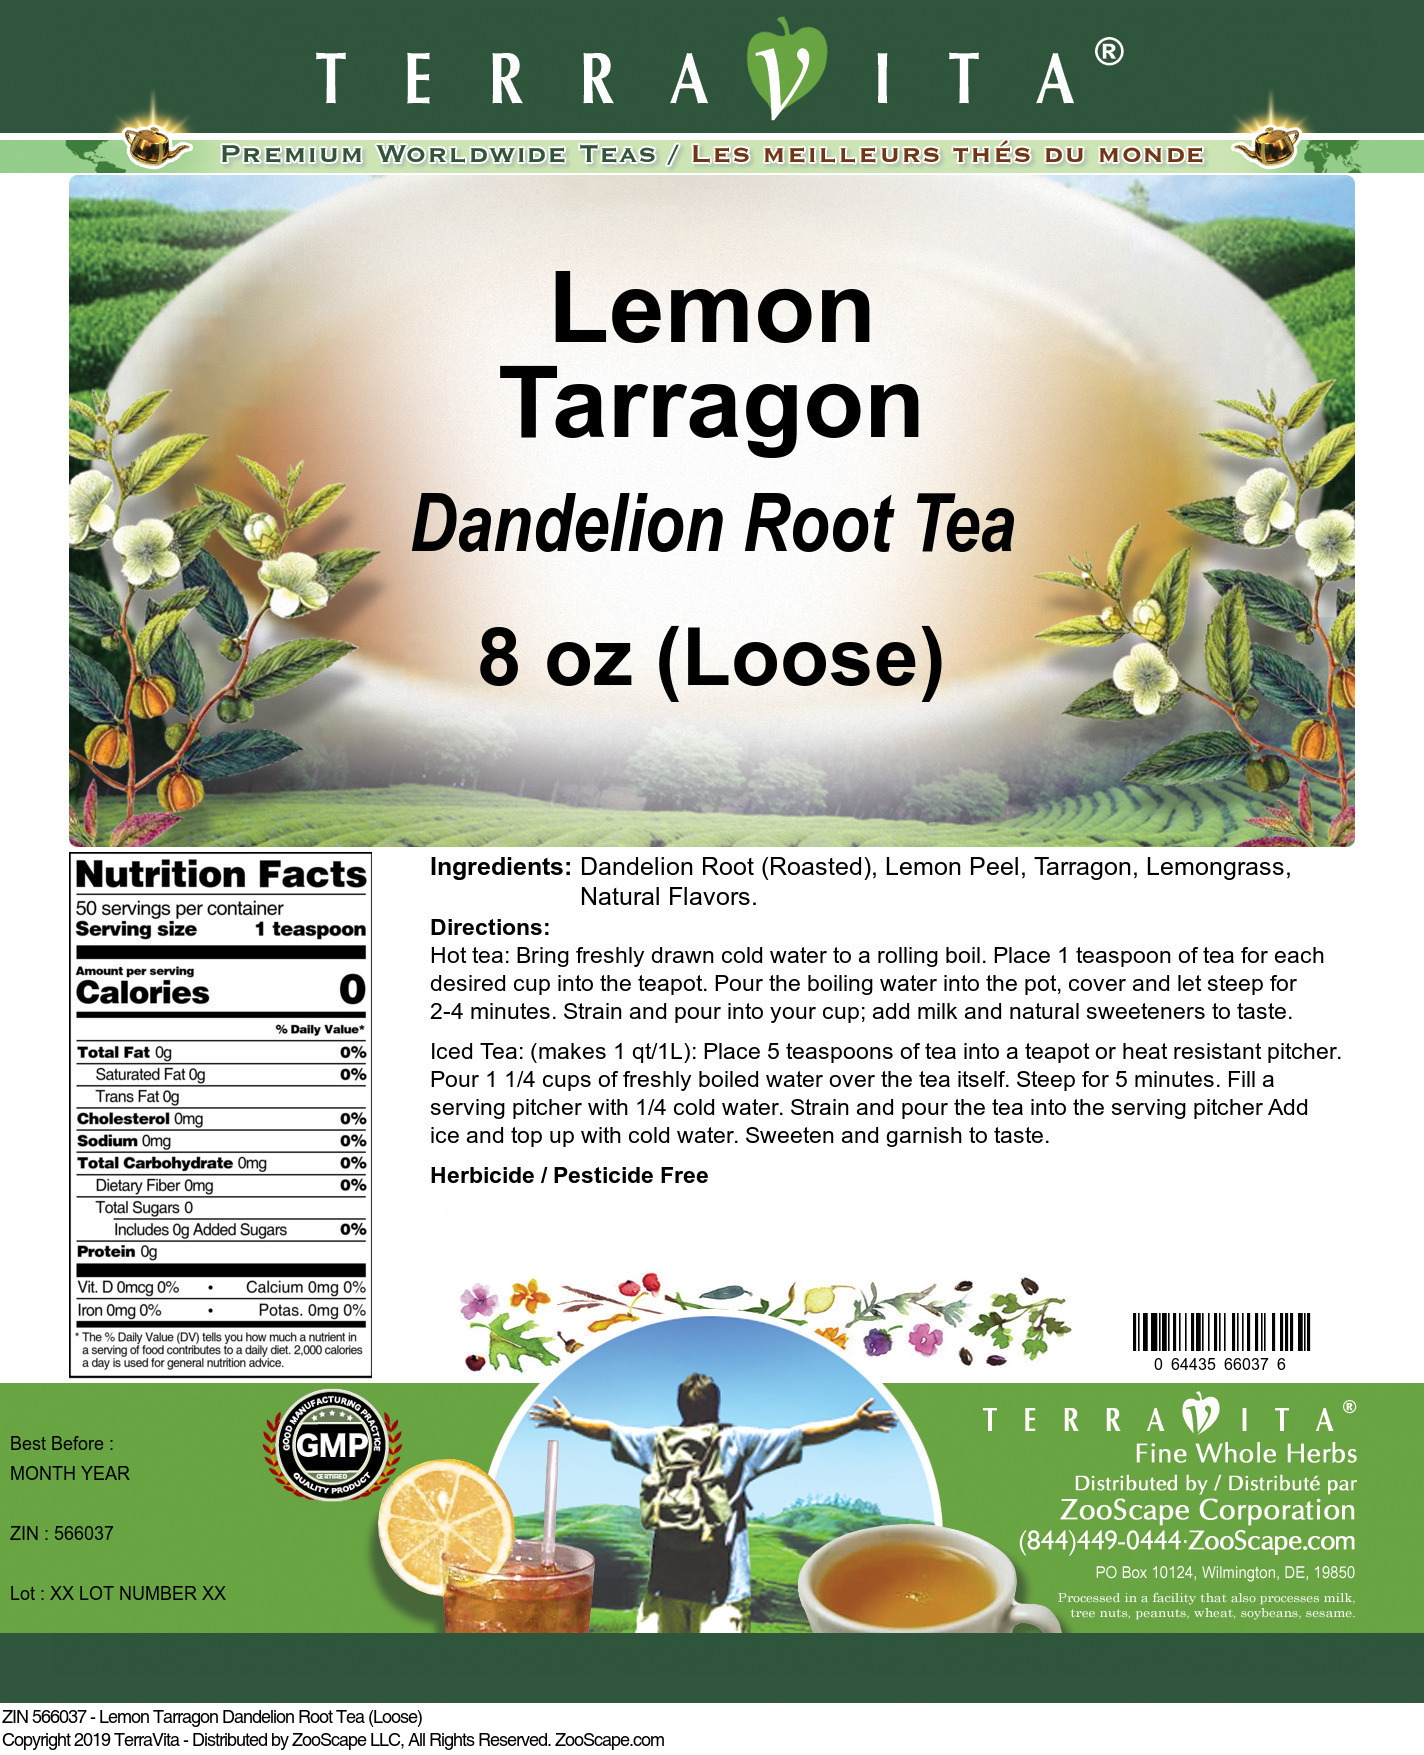 Lemon Tarragon Dandelion Root Tea (Loose) - Label